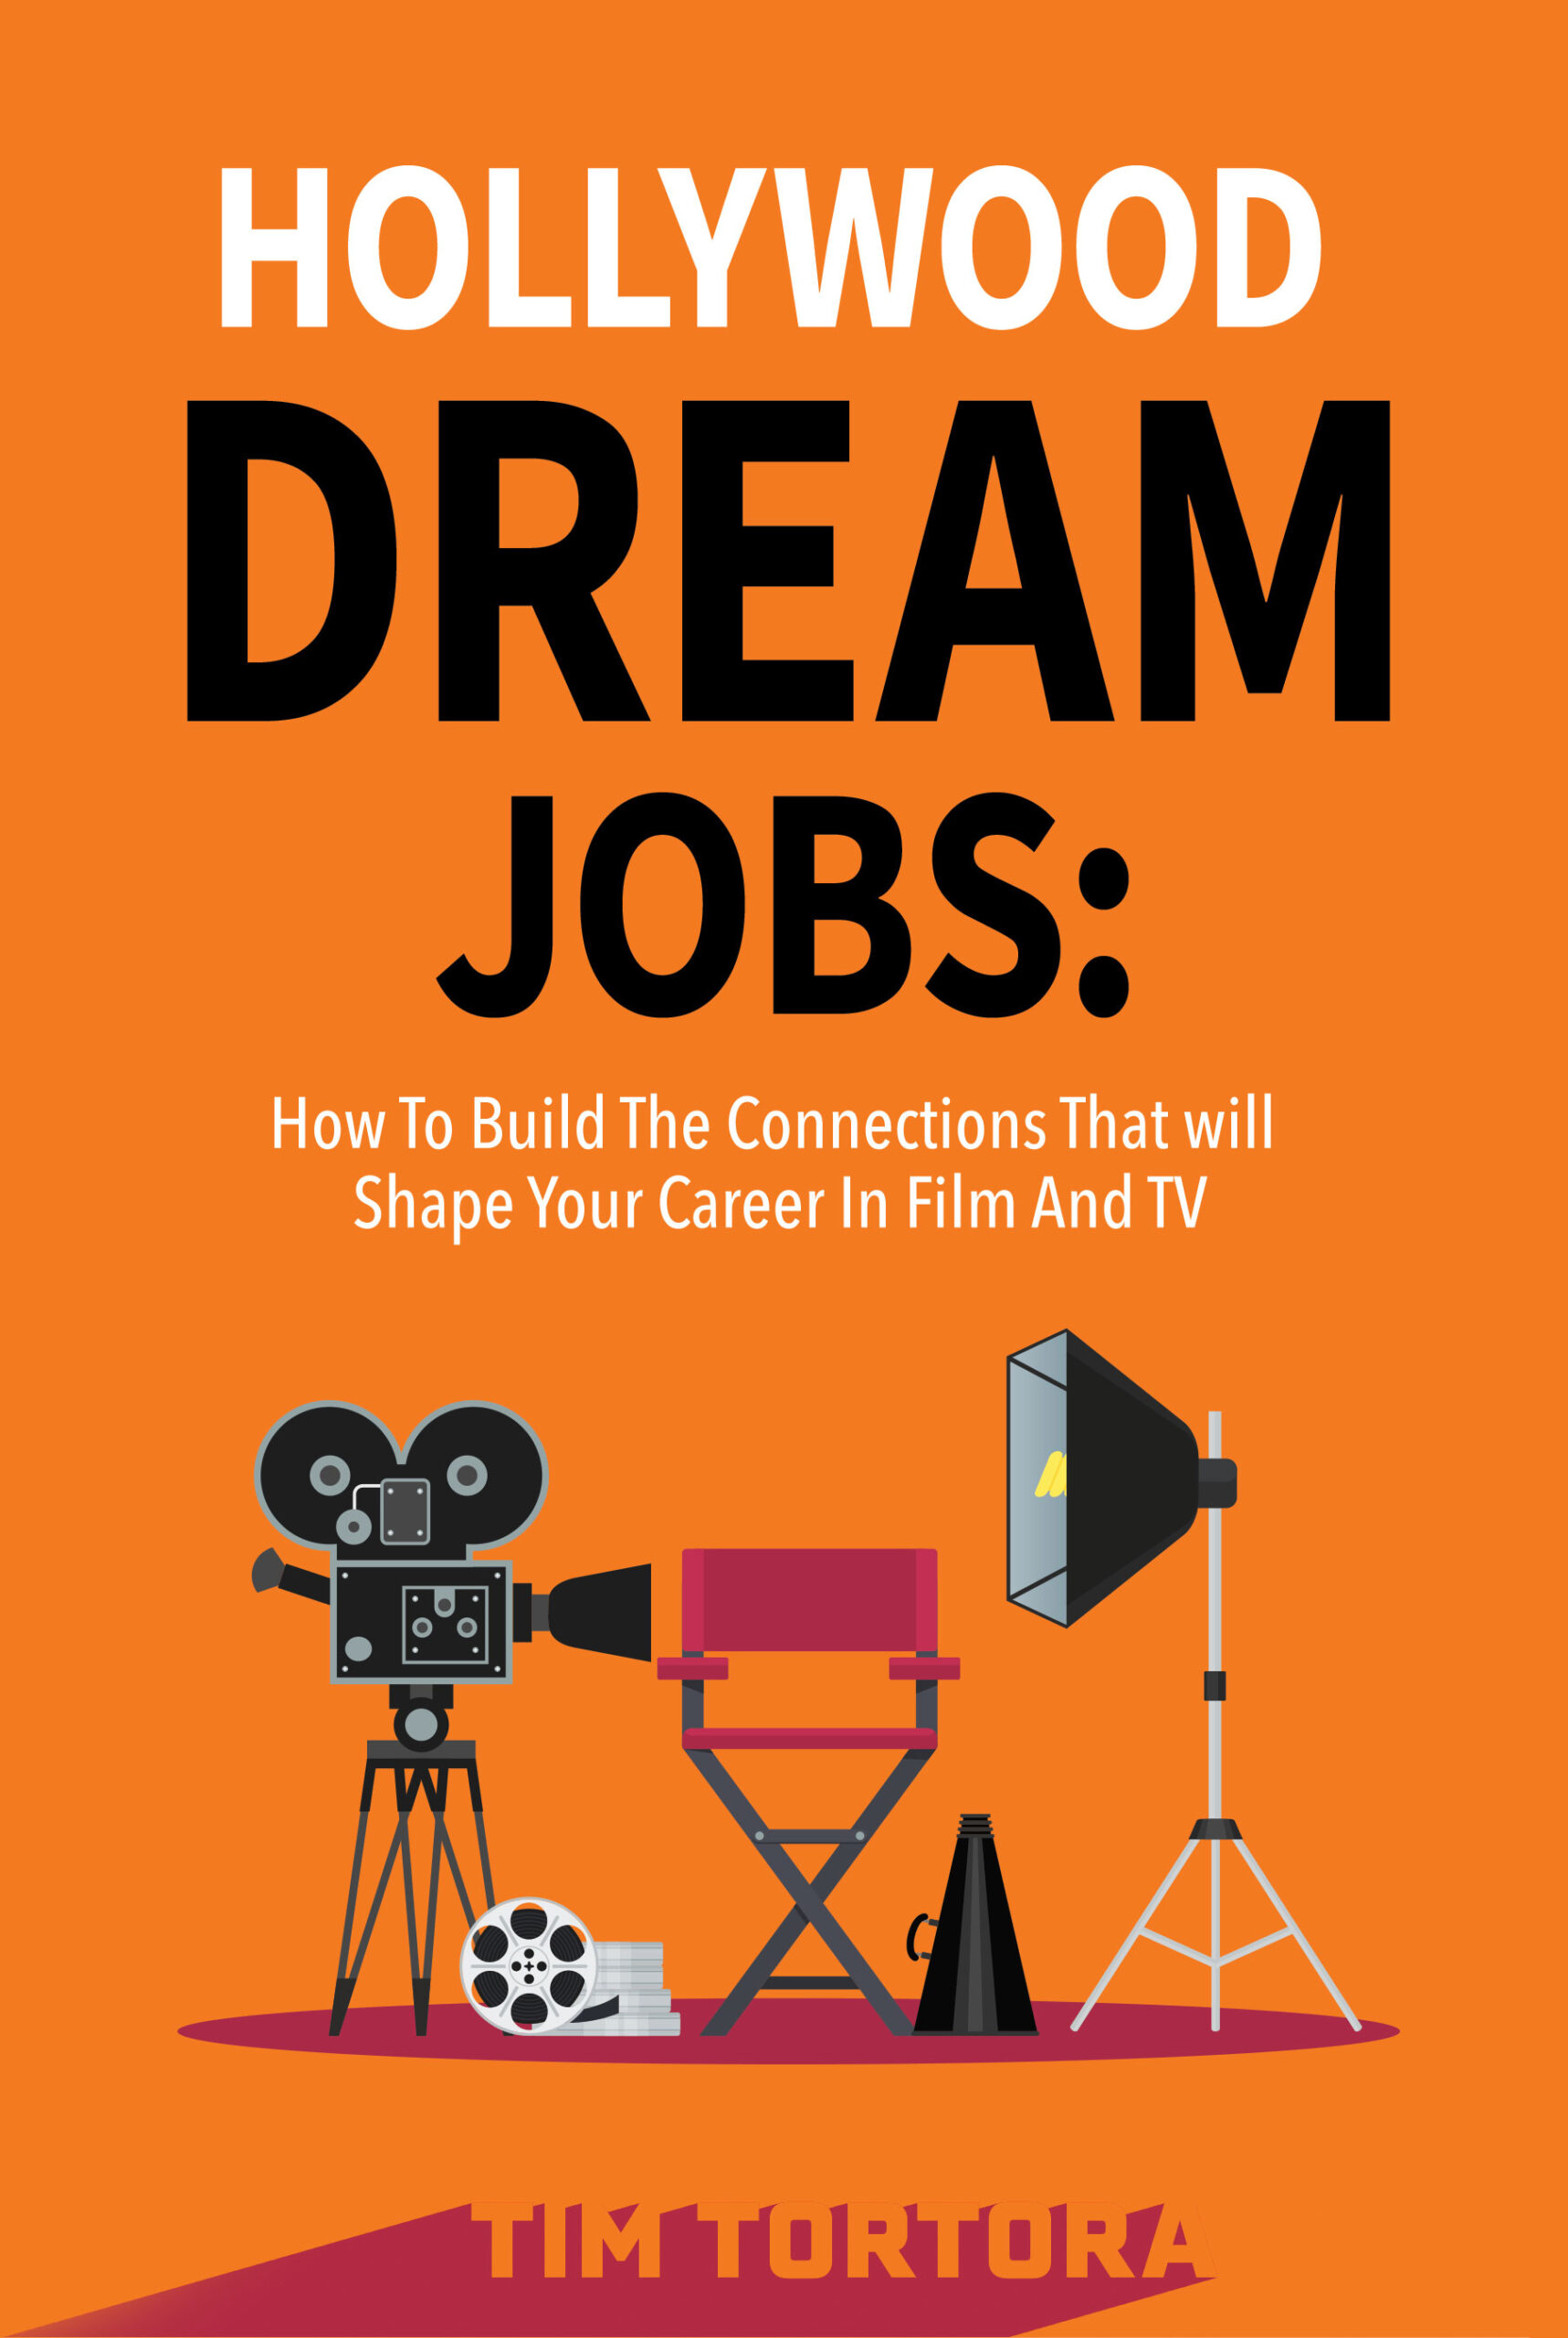 Hollywood-Dream-Jobs-Cover-scaled.jpg